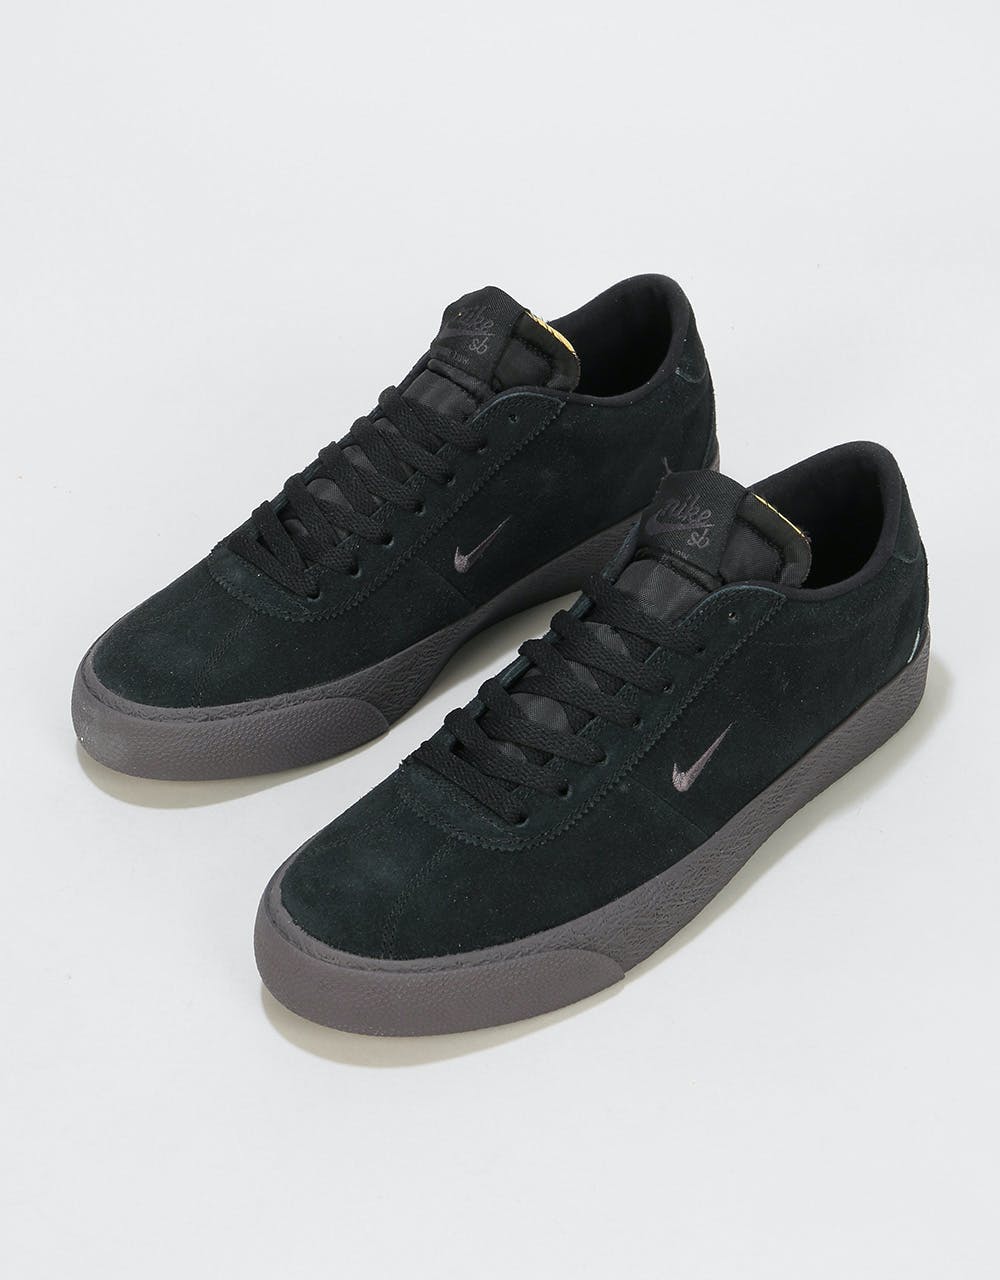 Nike SB Zoom Bruin Ultra Skate Shoes - Black/Thunder Grey